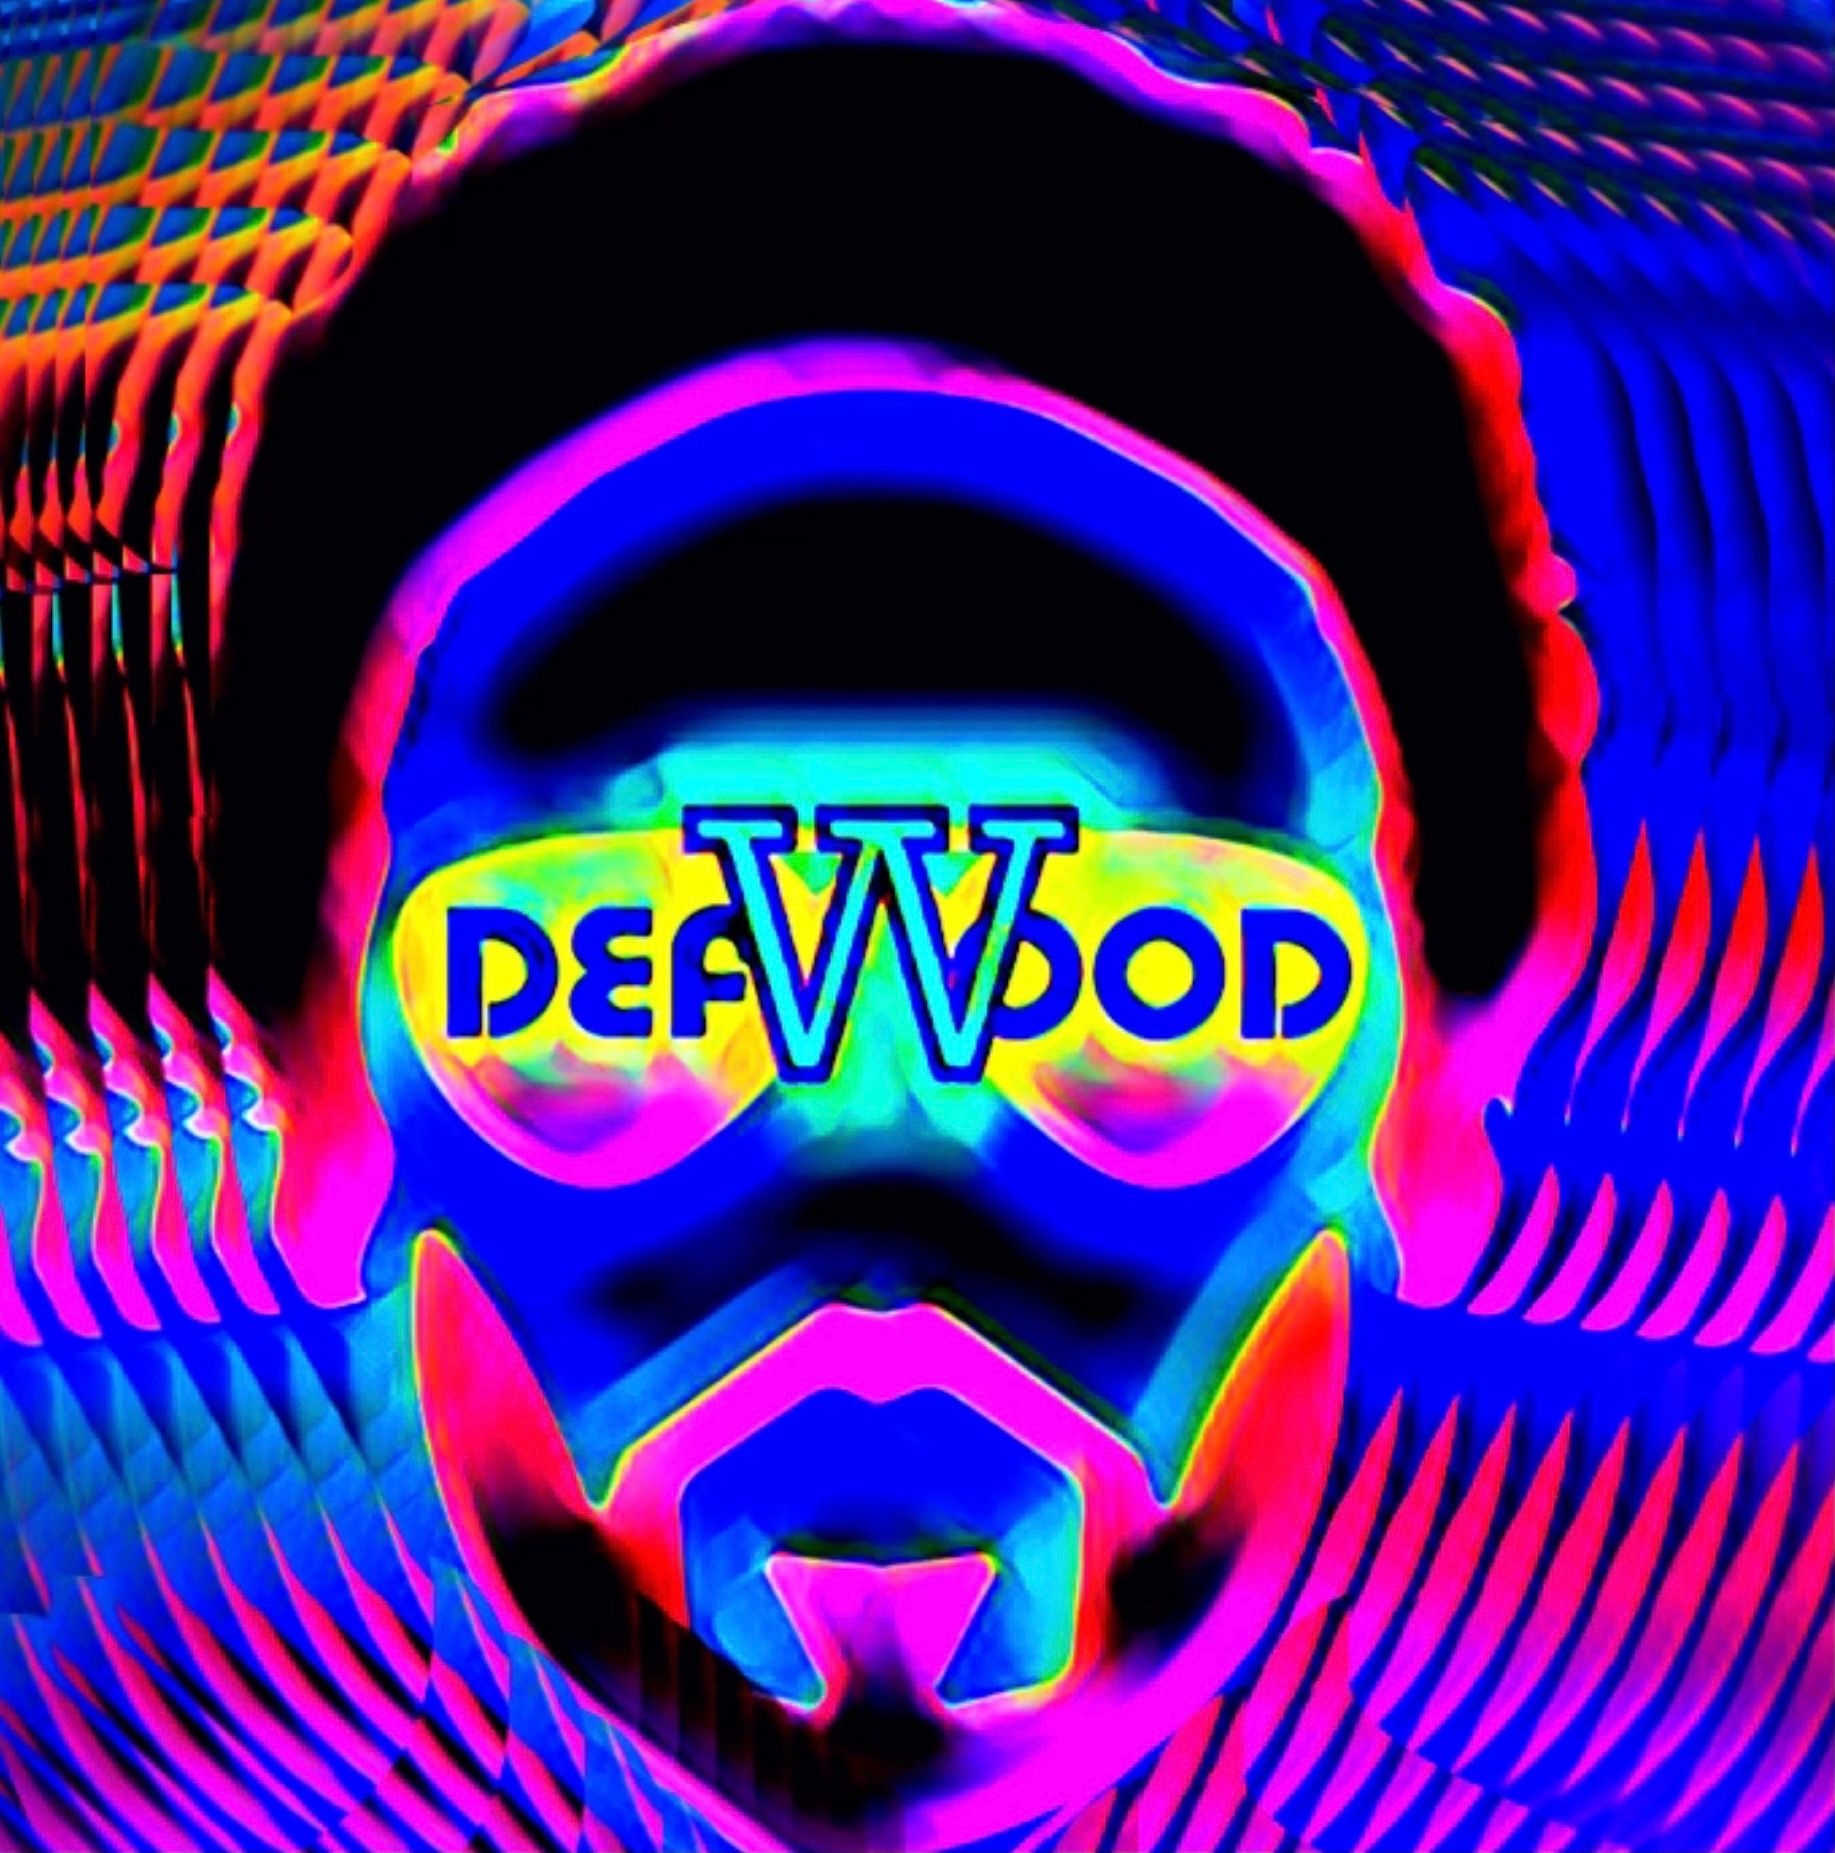 Defwood